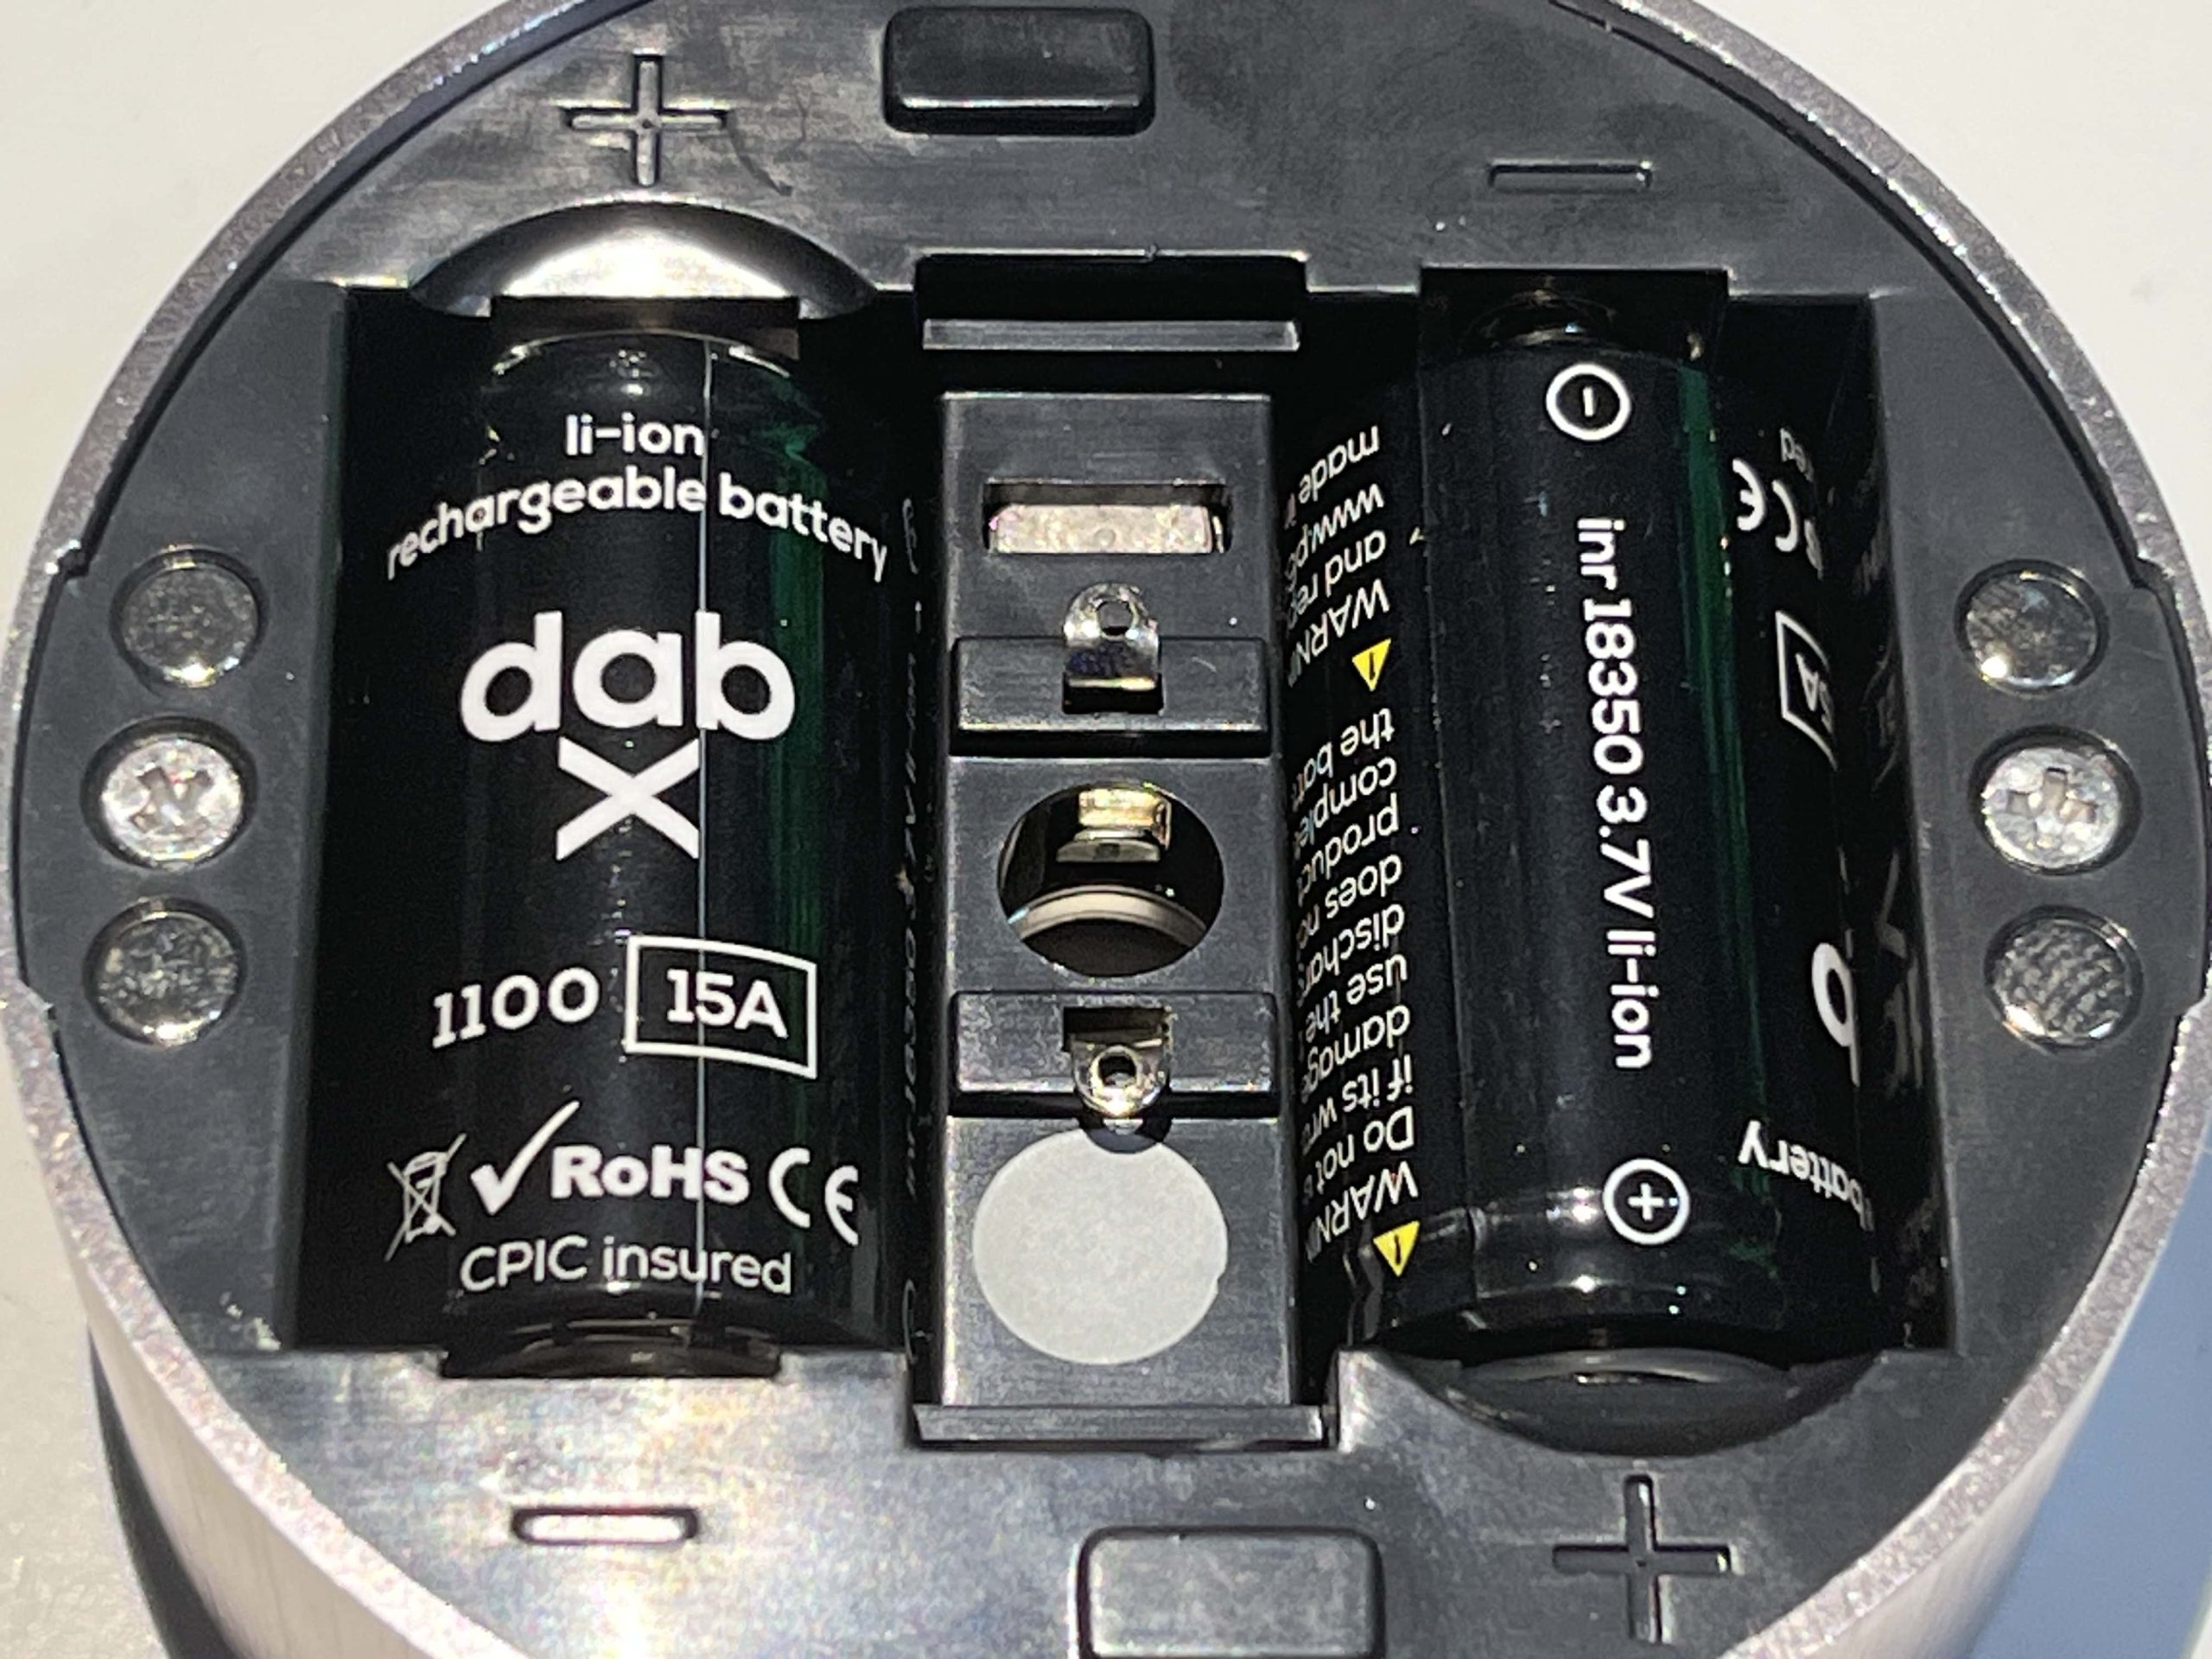 replaceable 18350 batteries!